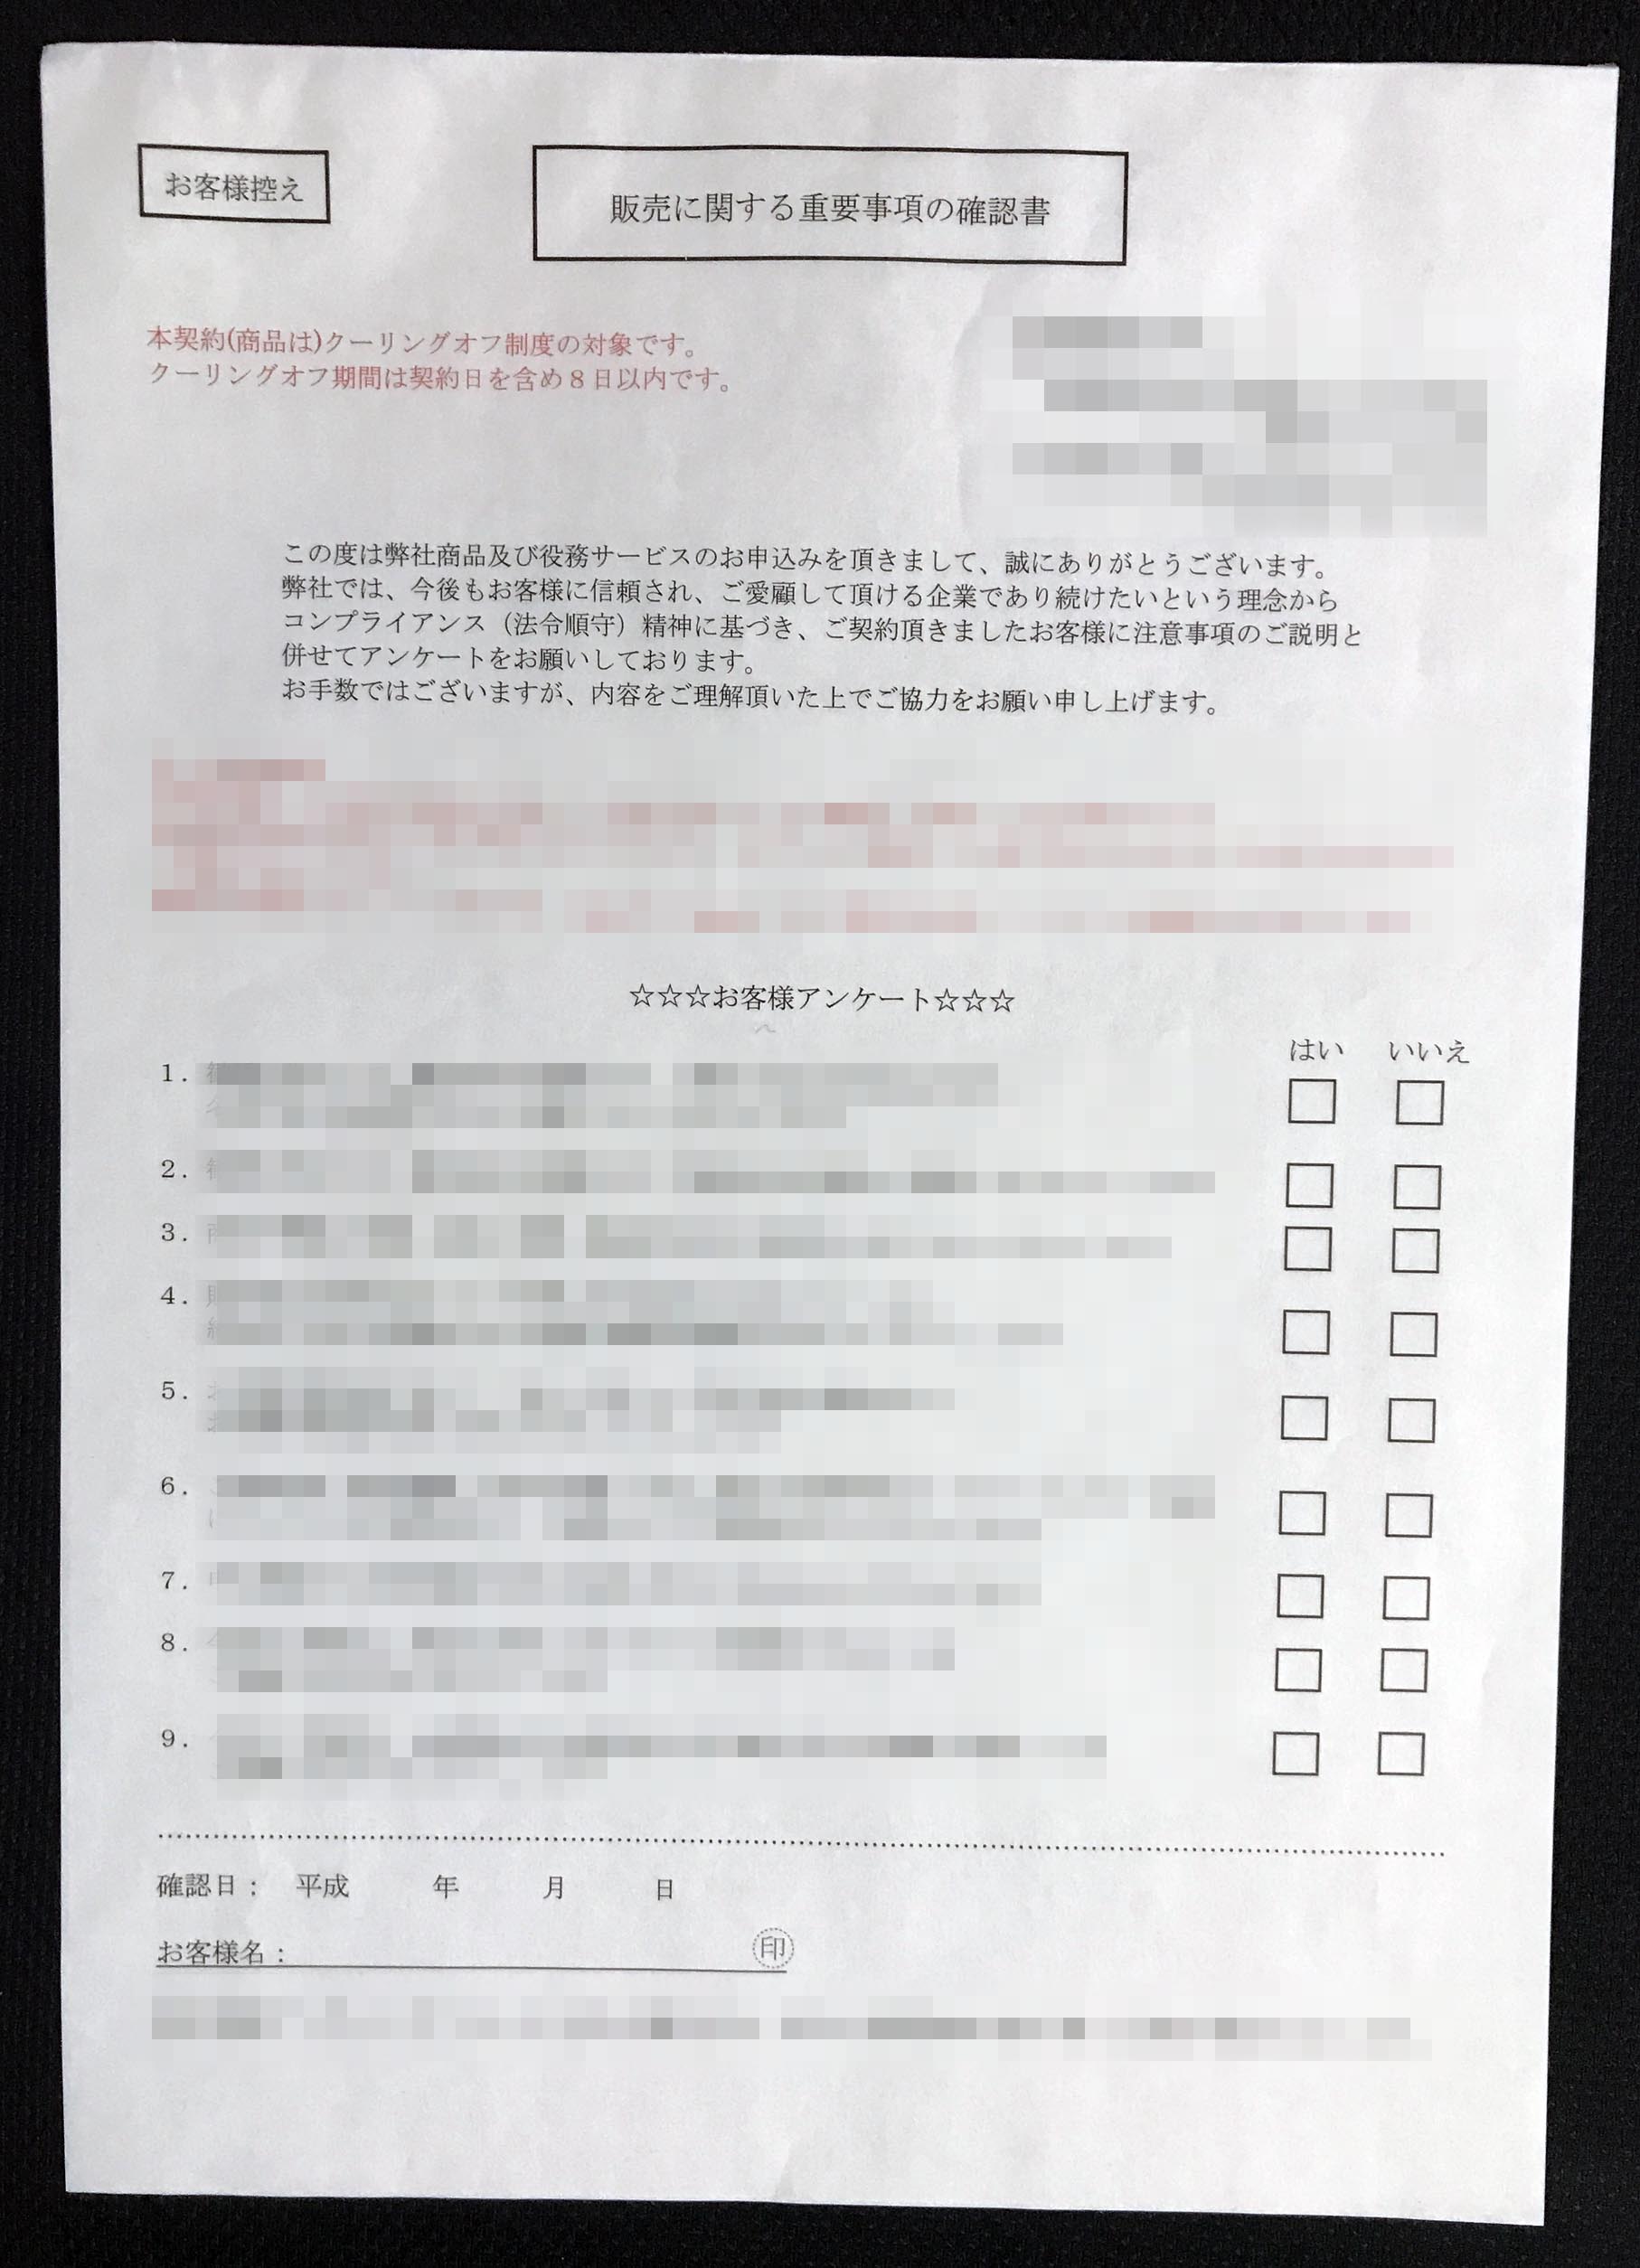 静岡県　デザイン業　重要事項確認書　(２枚複写)